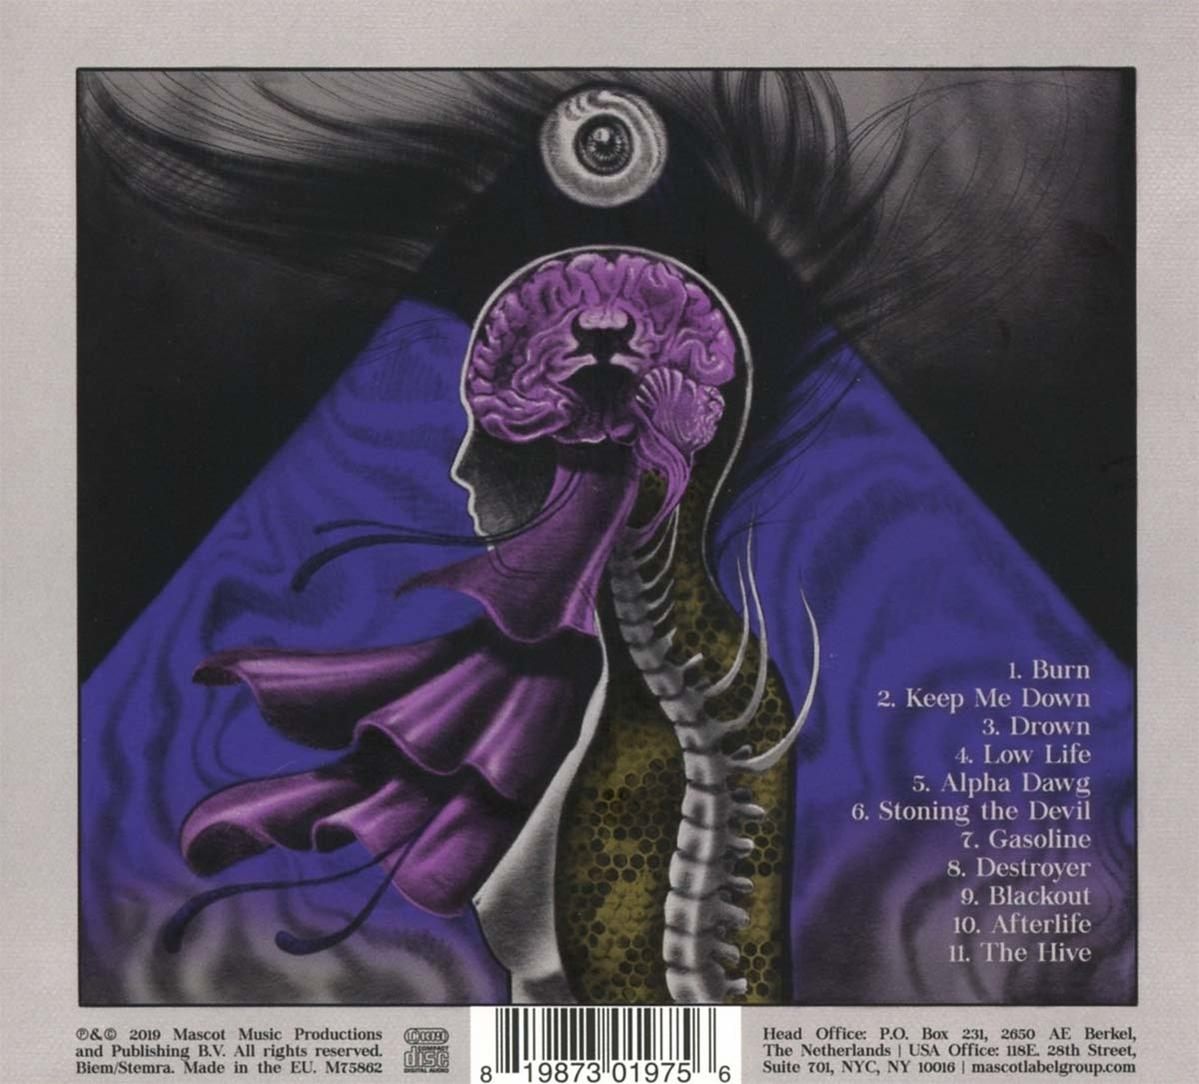 Crobot - Motherbrain - (CD)